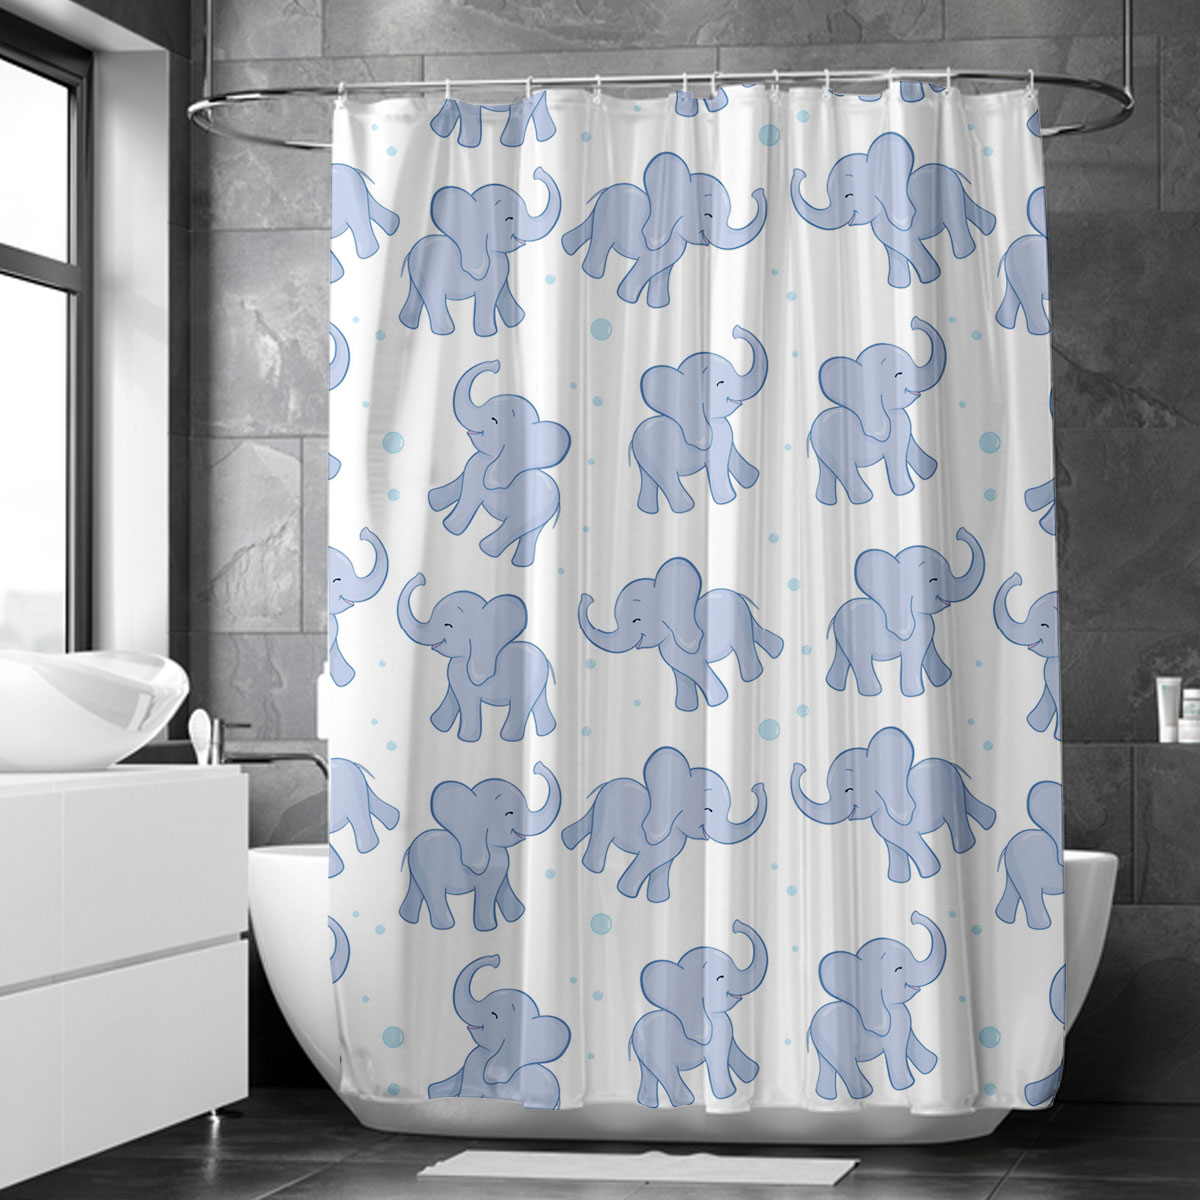 Funny Asian Elephant Shower Curtain 6